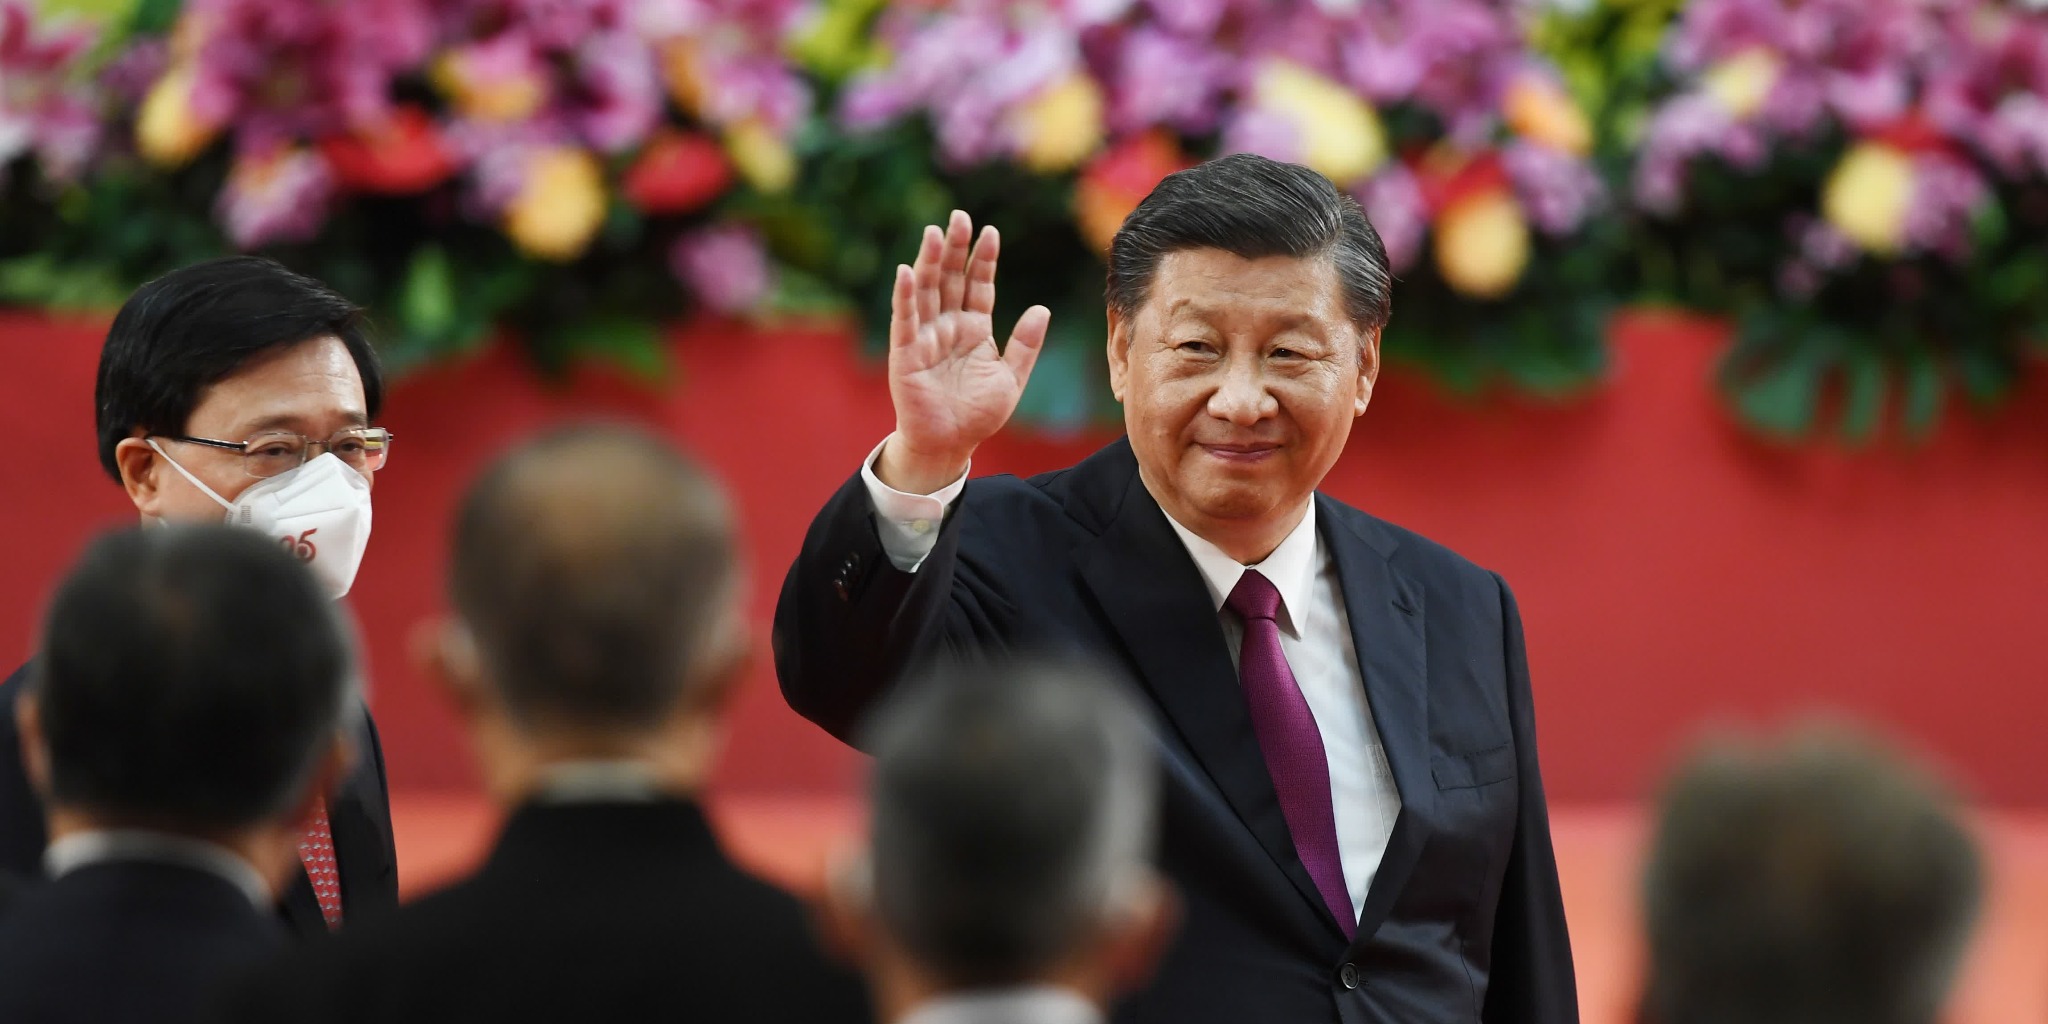 Hong Kong will achieve even greater accomplishments: Xi